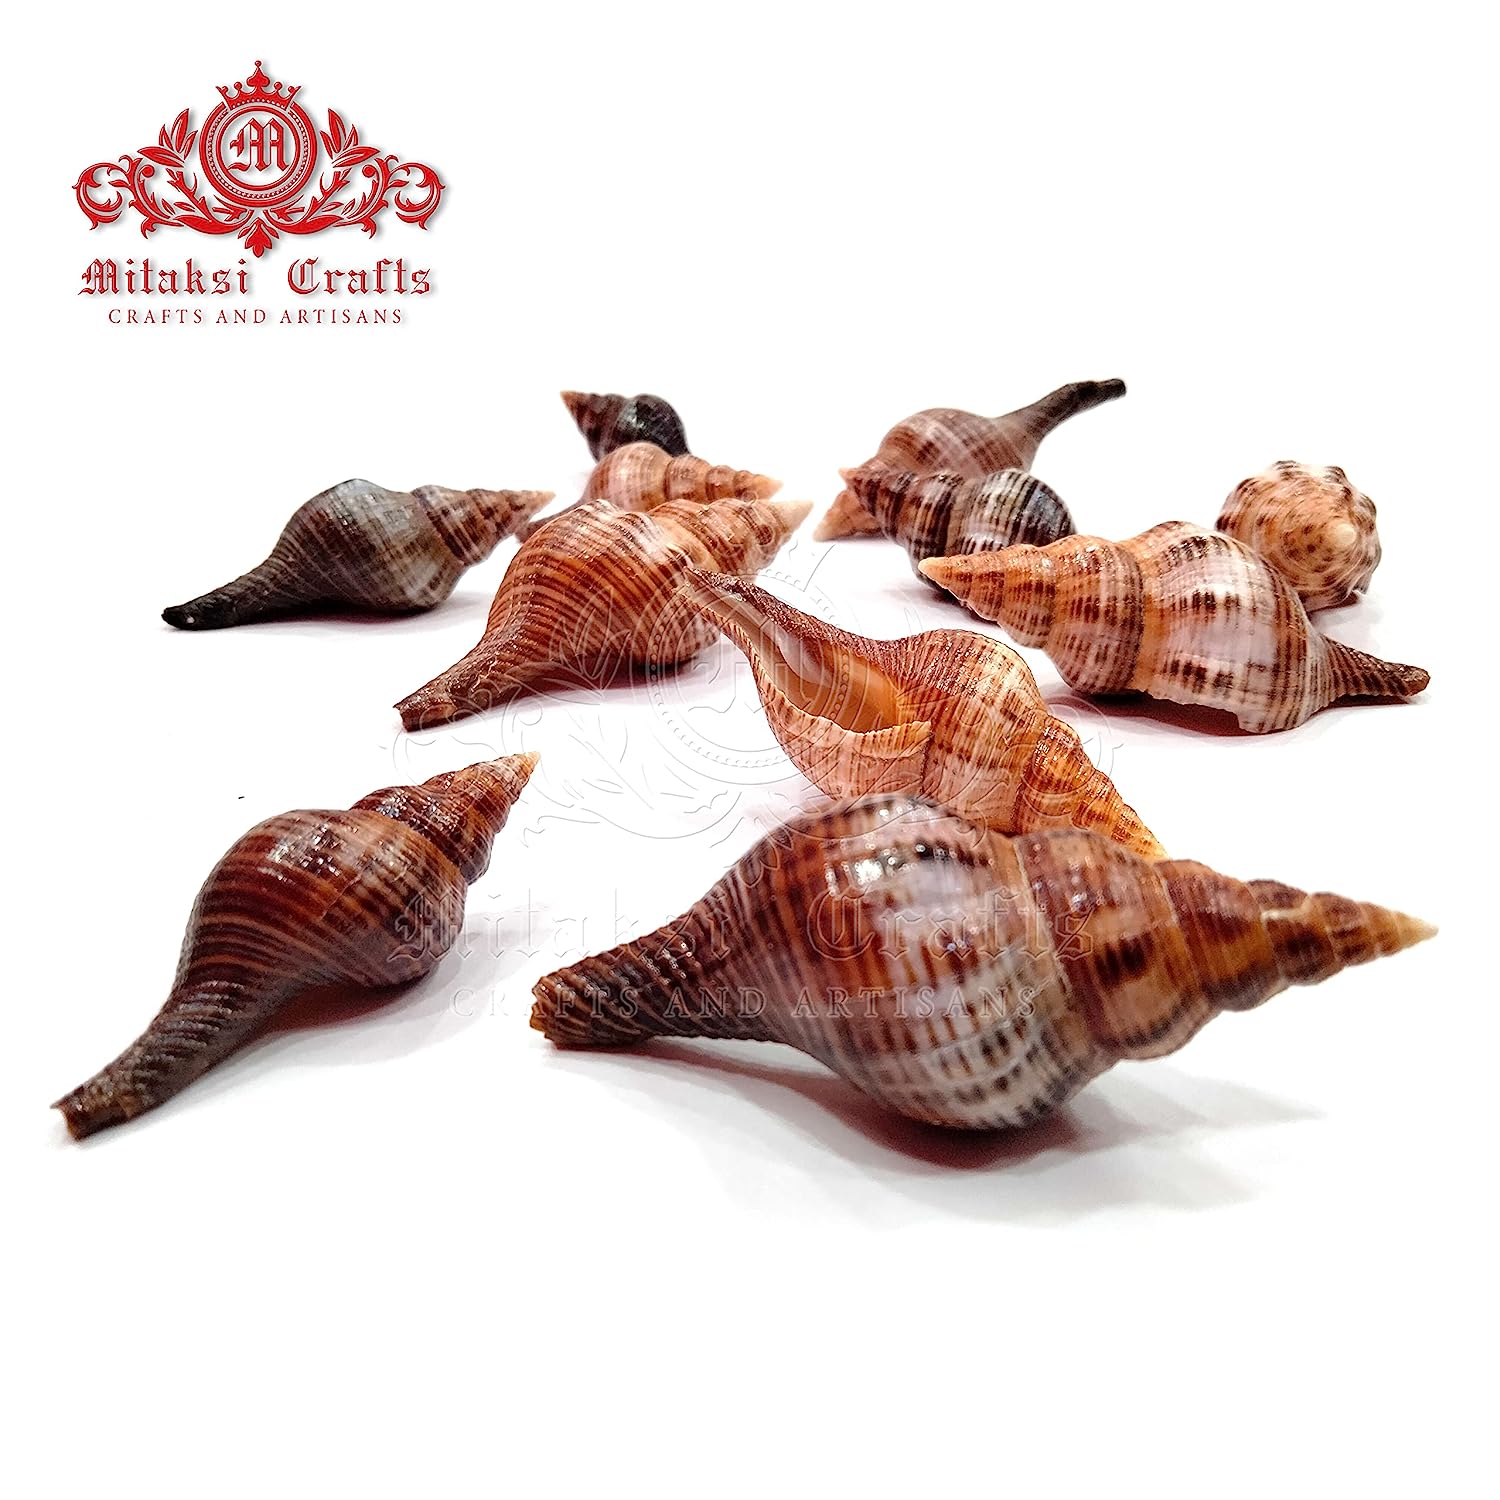 Seashell - Filamentous Horse Conch - Filifusus Filamentosus - Senseval Sangu - Ideal for Crafts Pack of 15 - 500gms